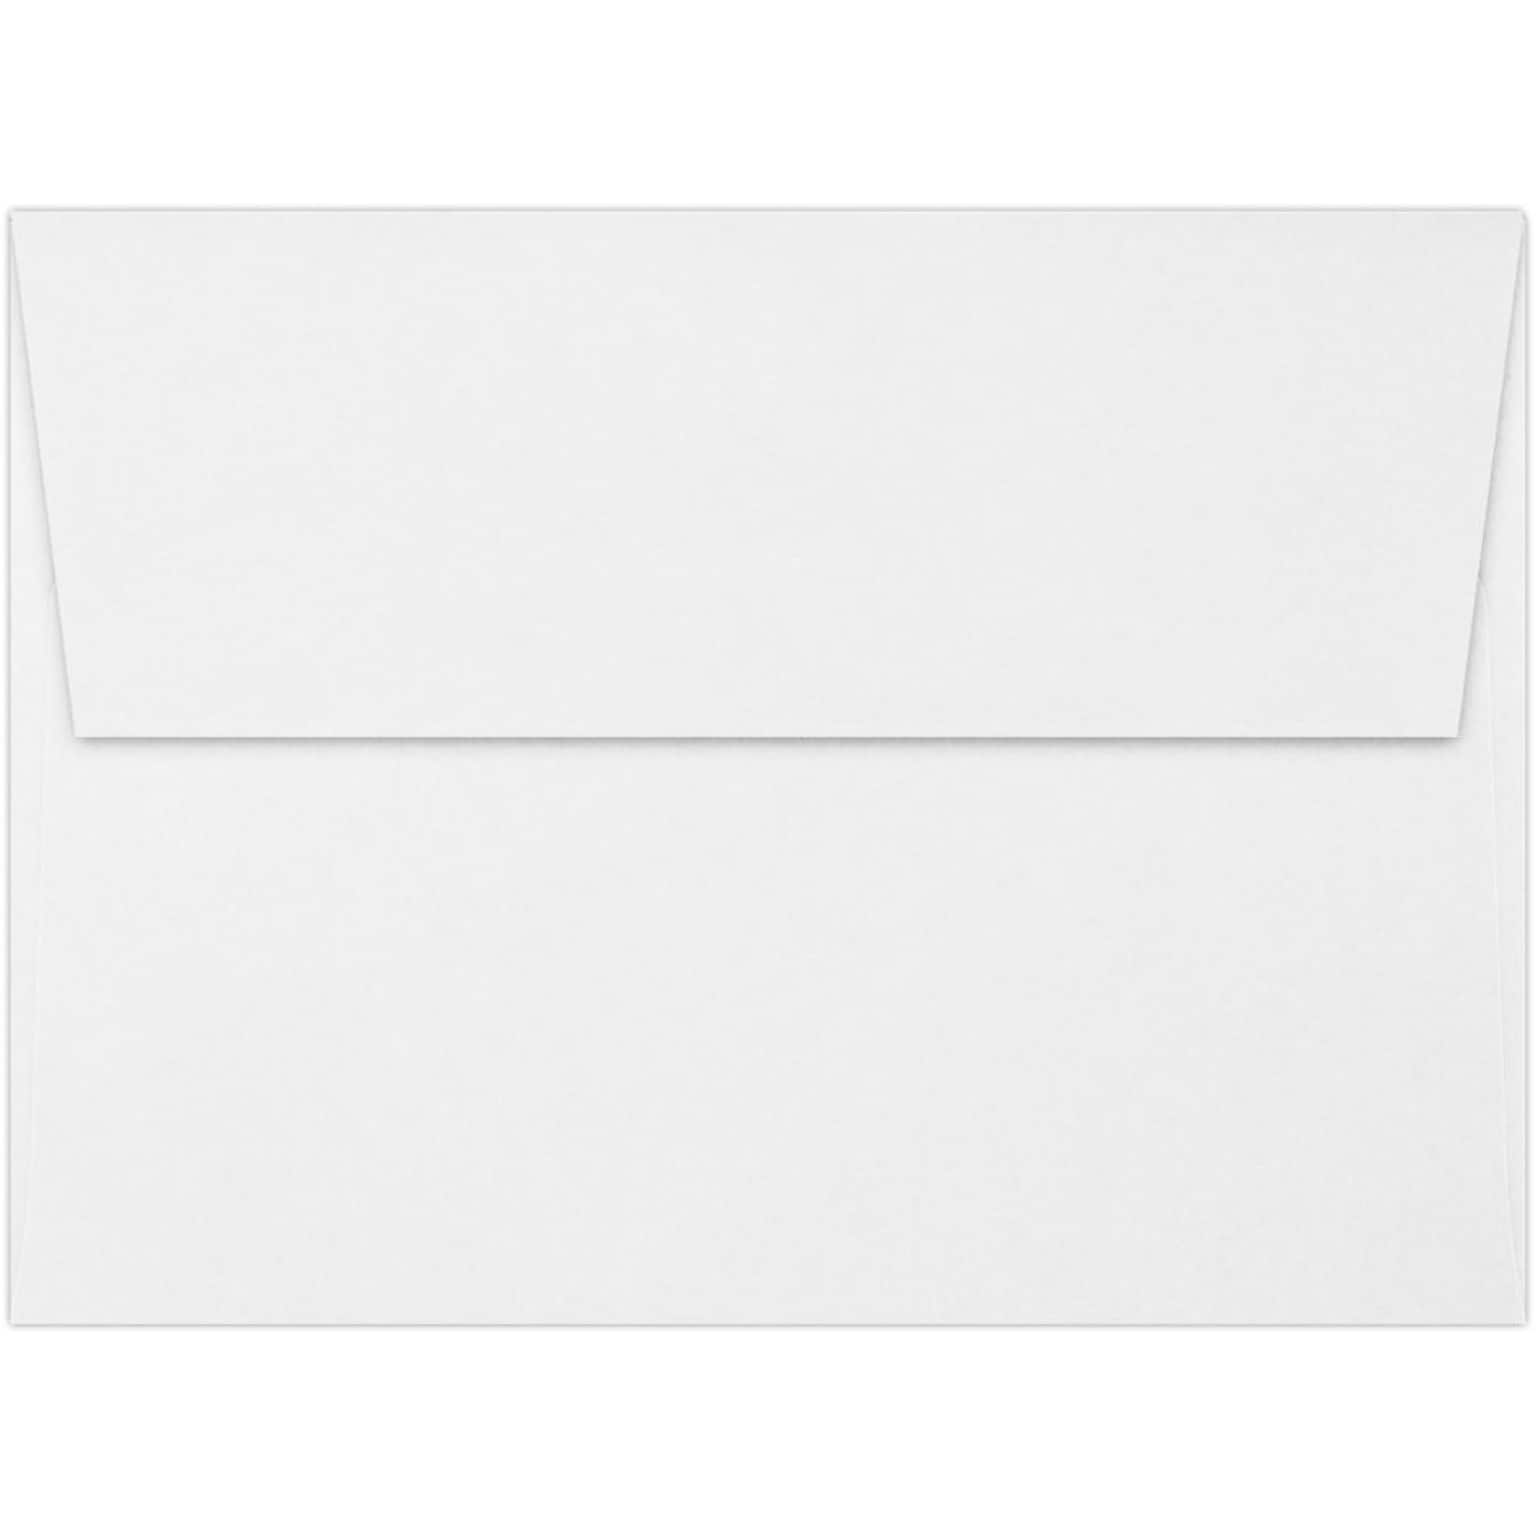 LUX A7 Invitation Envelopes (5 1/4 x 7 1/4) 500/Pack, Classic Crest® Whitestone (4880-70WS-500)